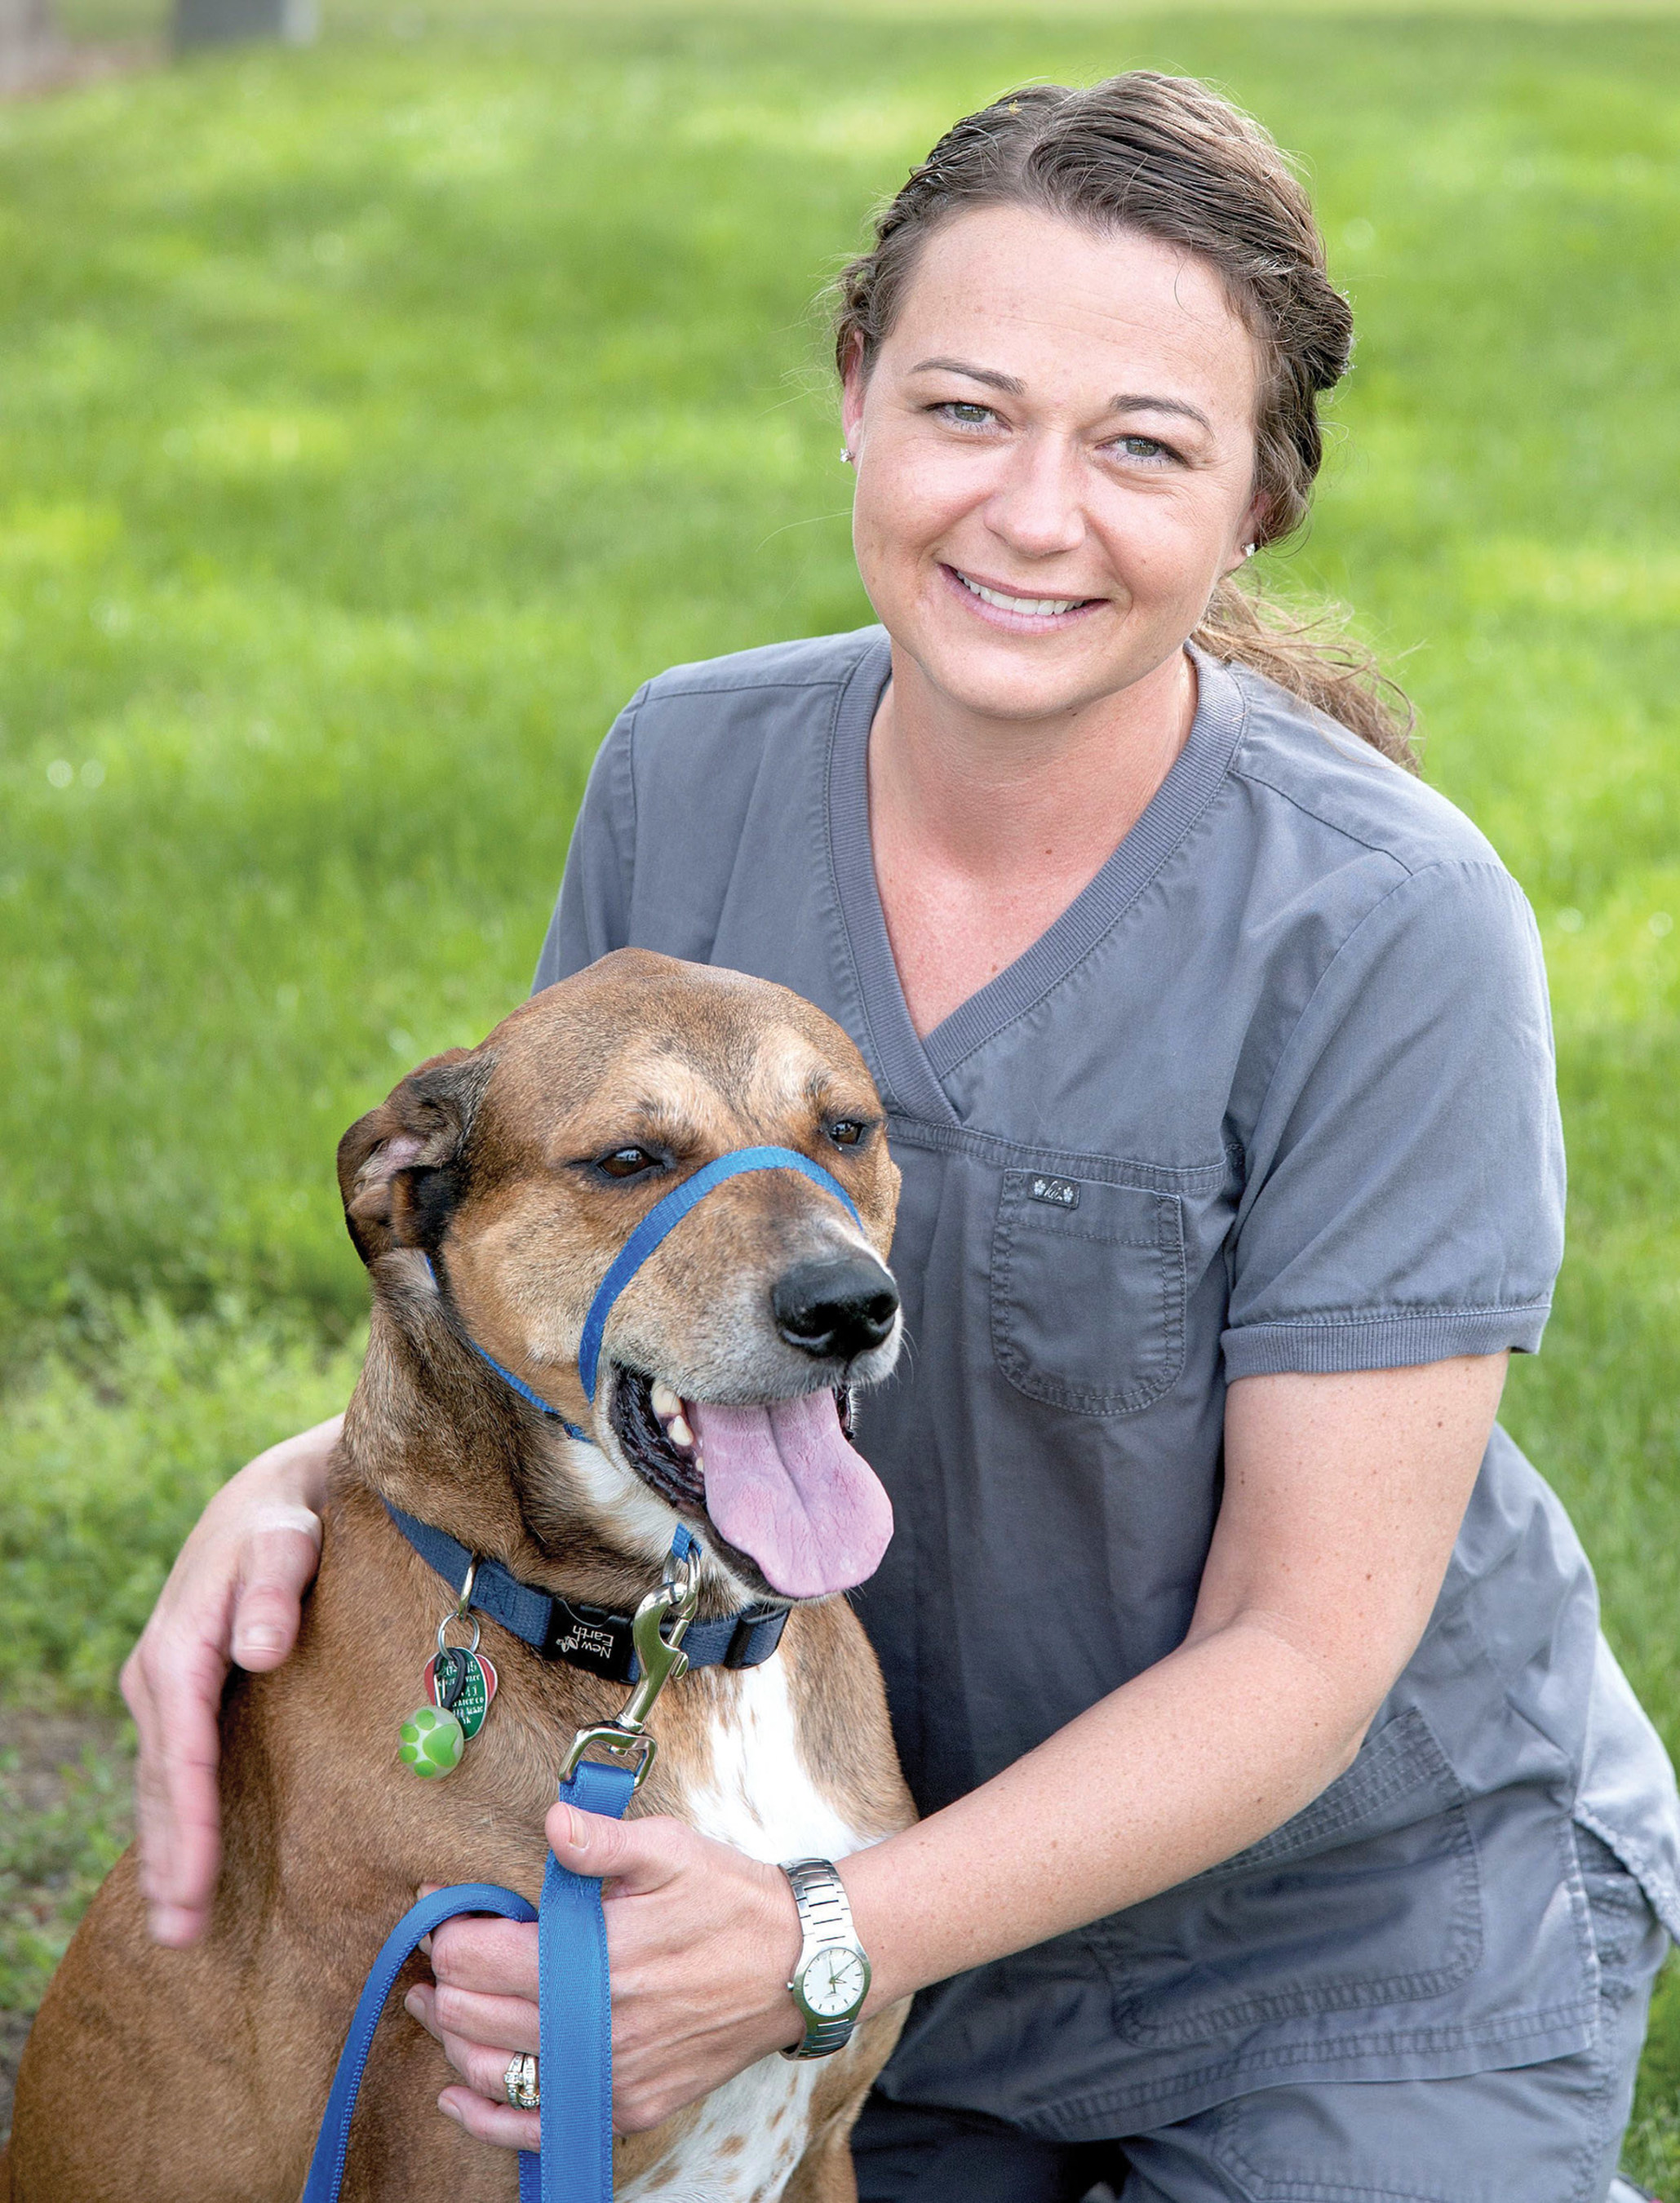 Kim Knap of Urbana, Illinois was named the American Humane Hero Veterinary Technician for 2016.